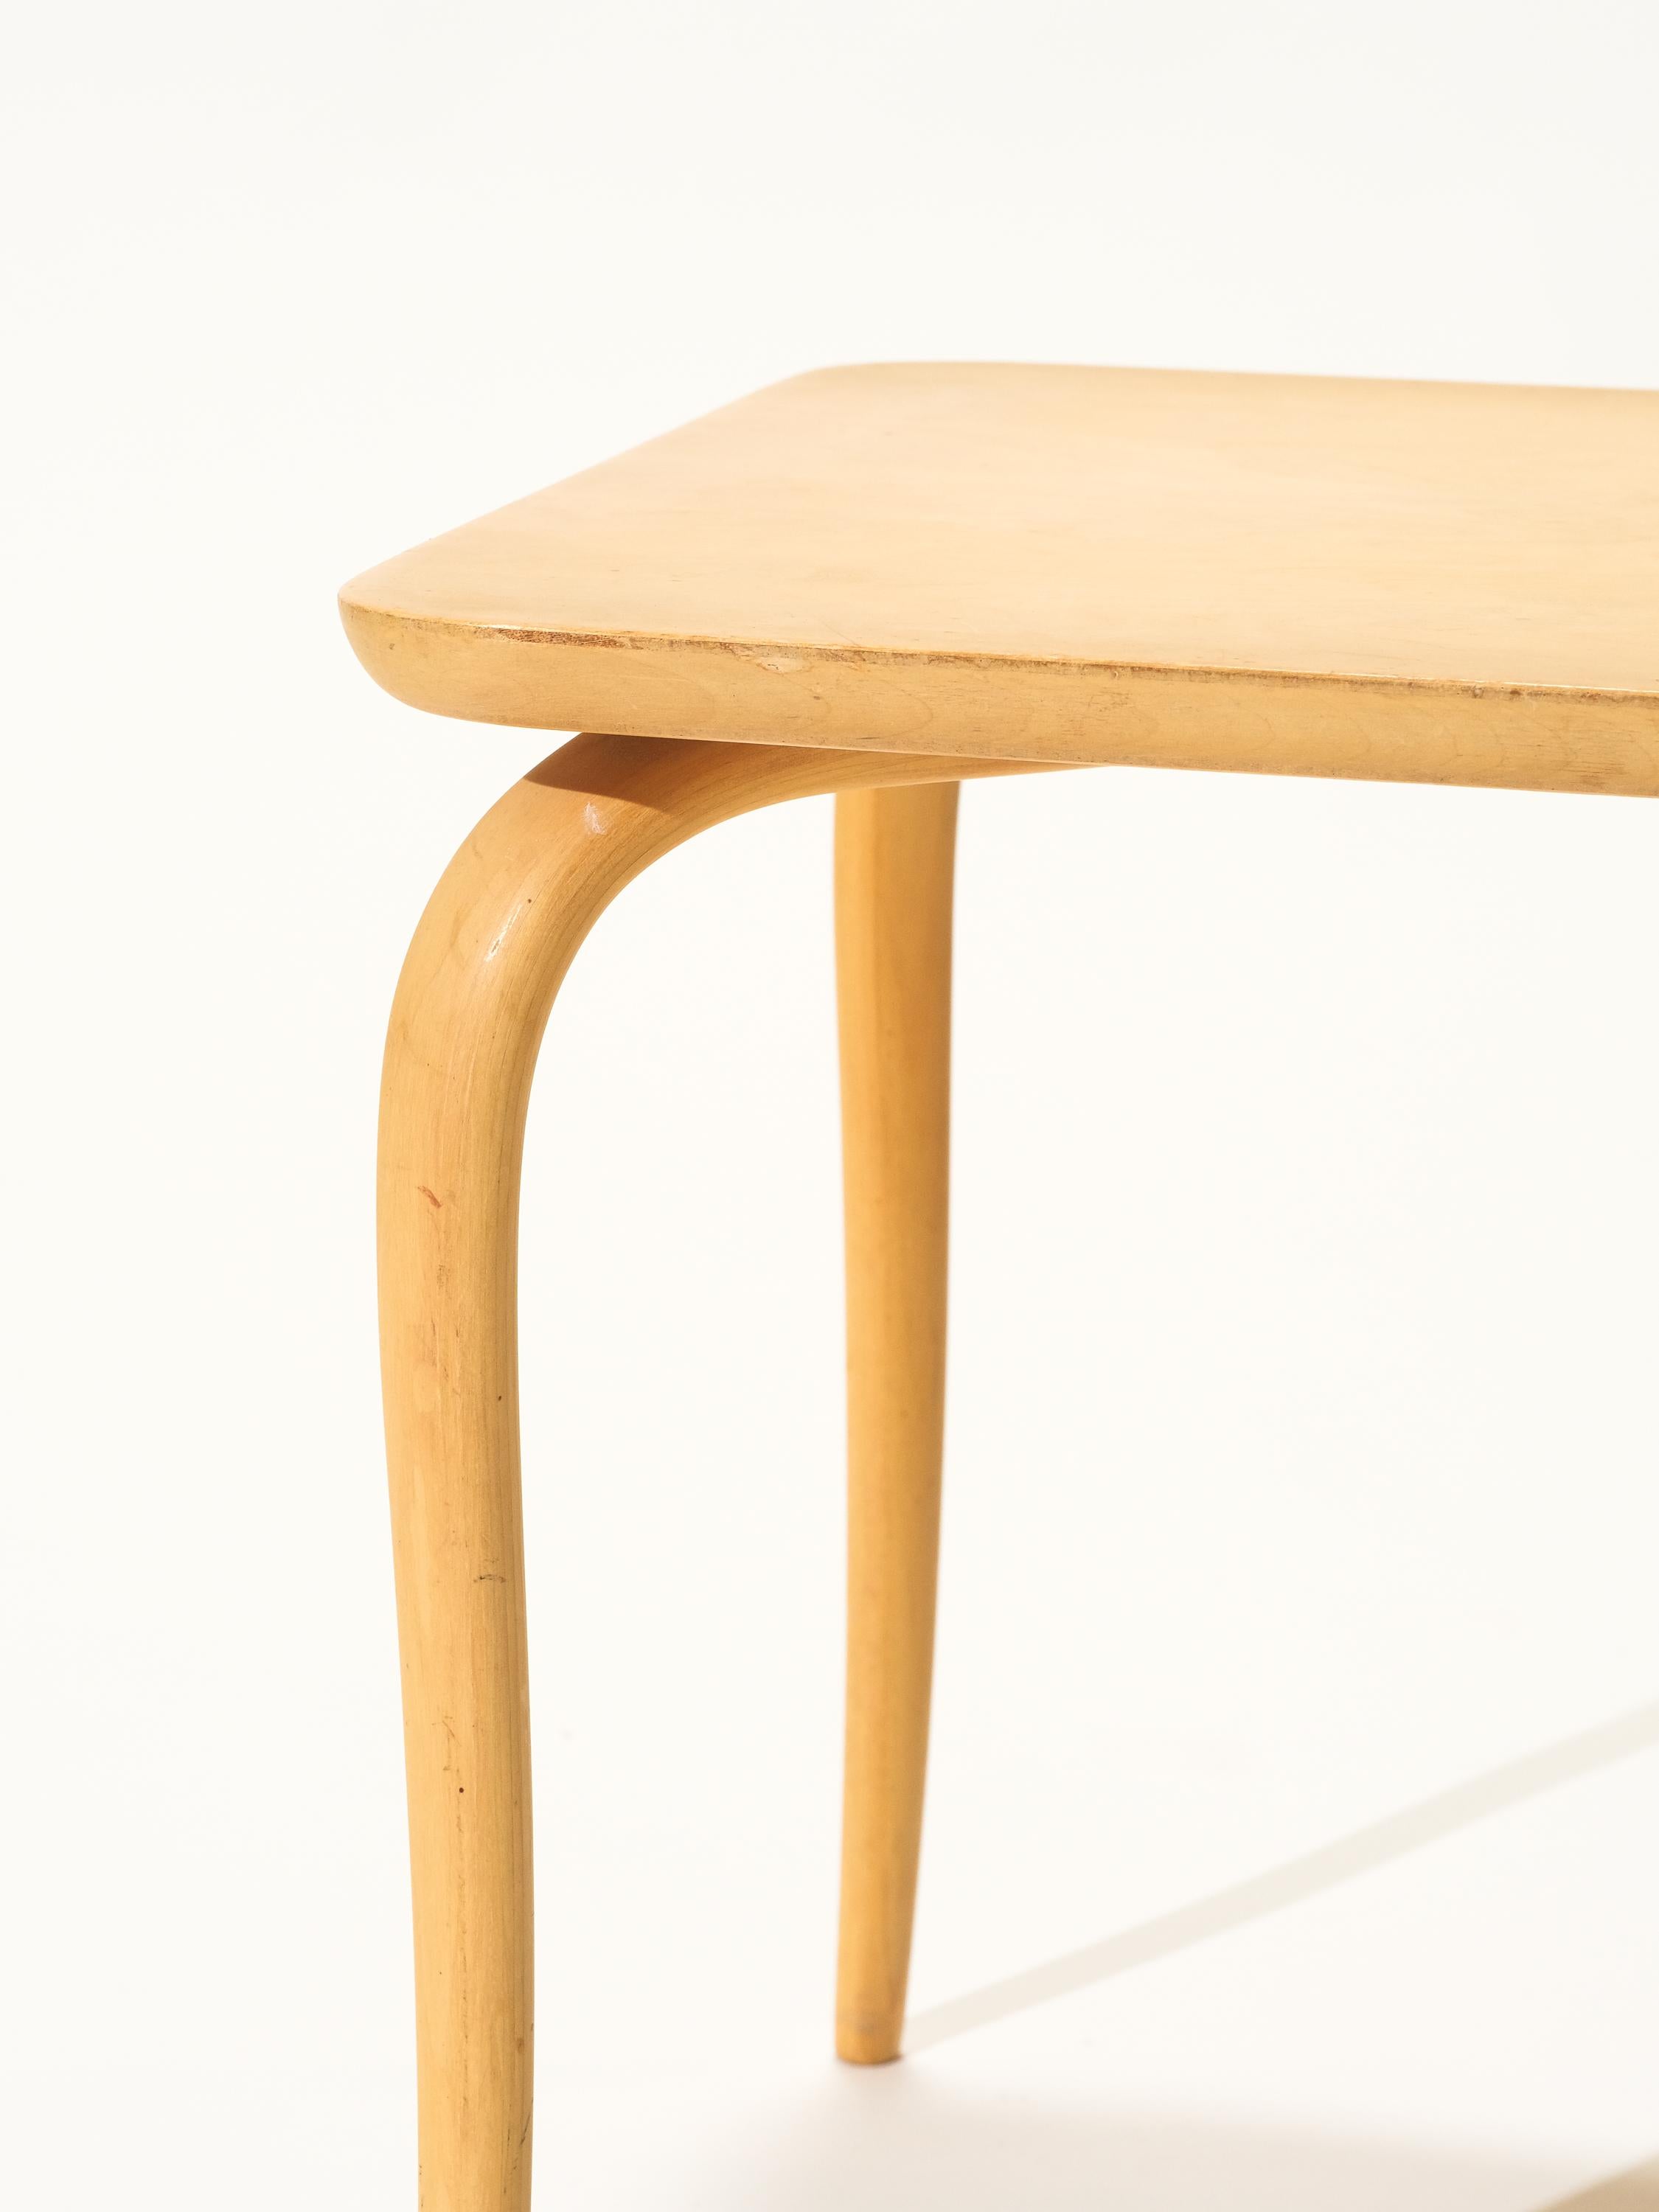 Birch Side Table “Annika” by Bruno Mathsson for Karl Mathsson, Sweden, 1960s For Sale 1